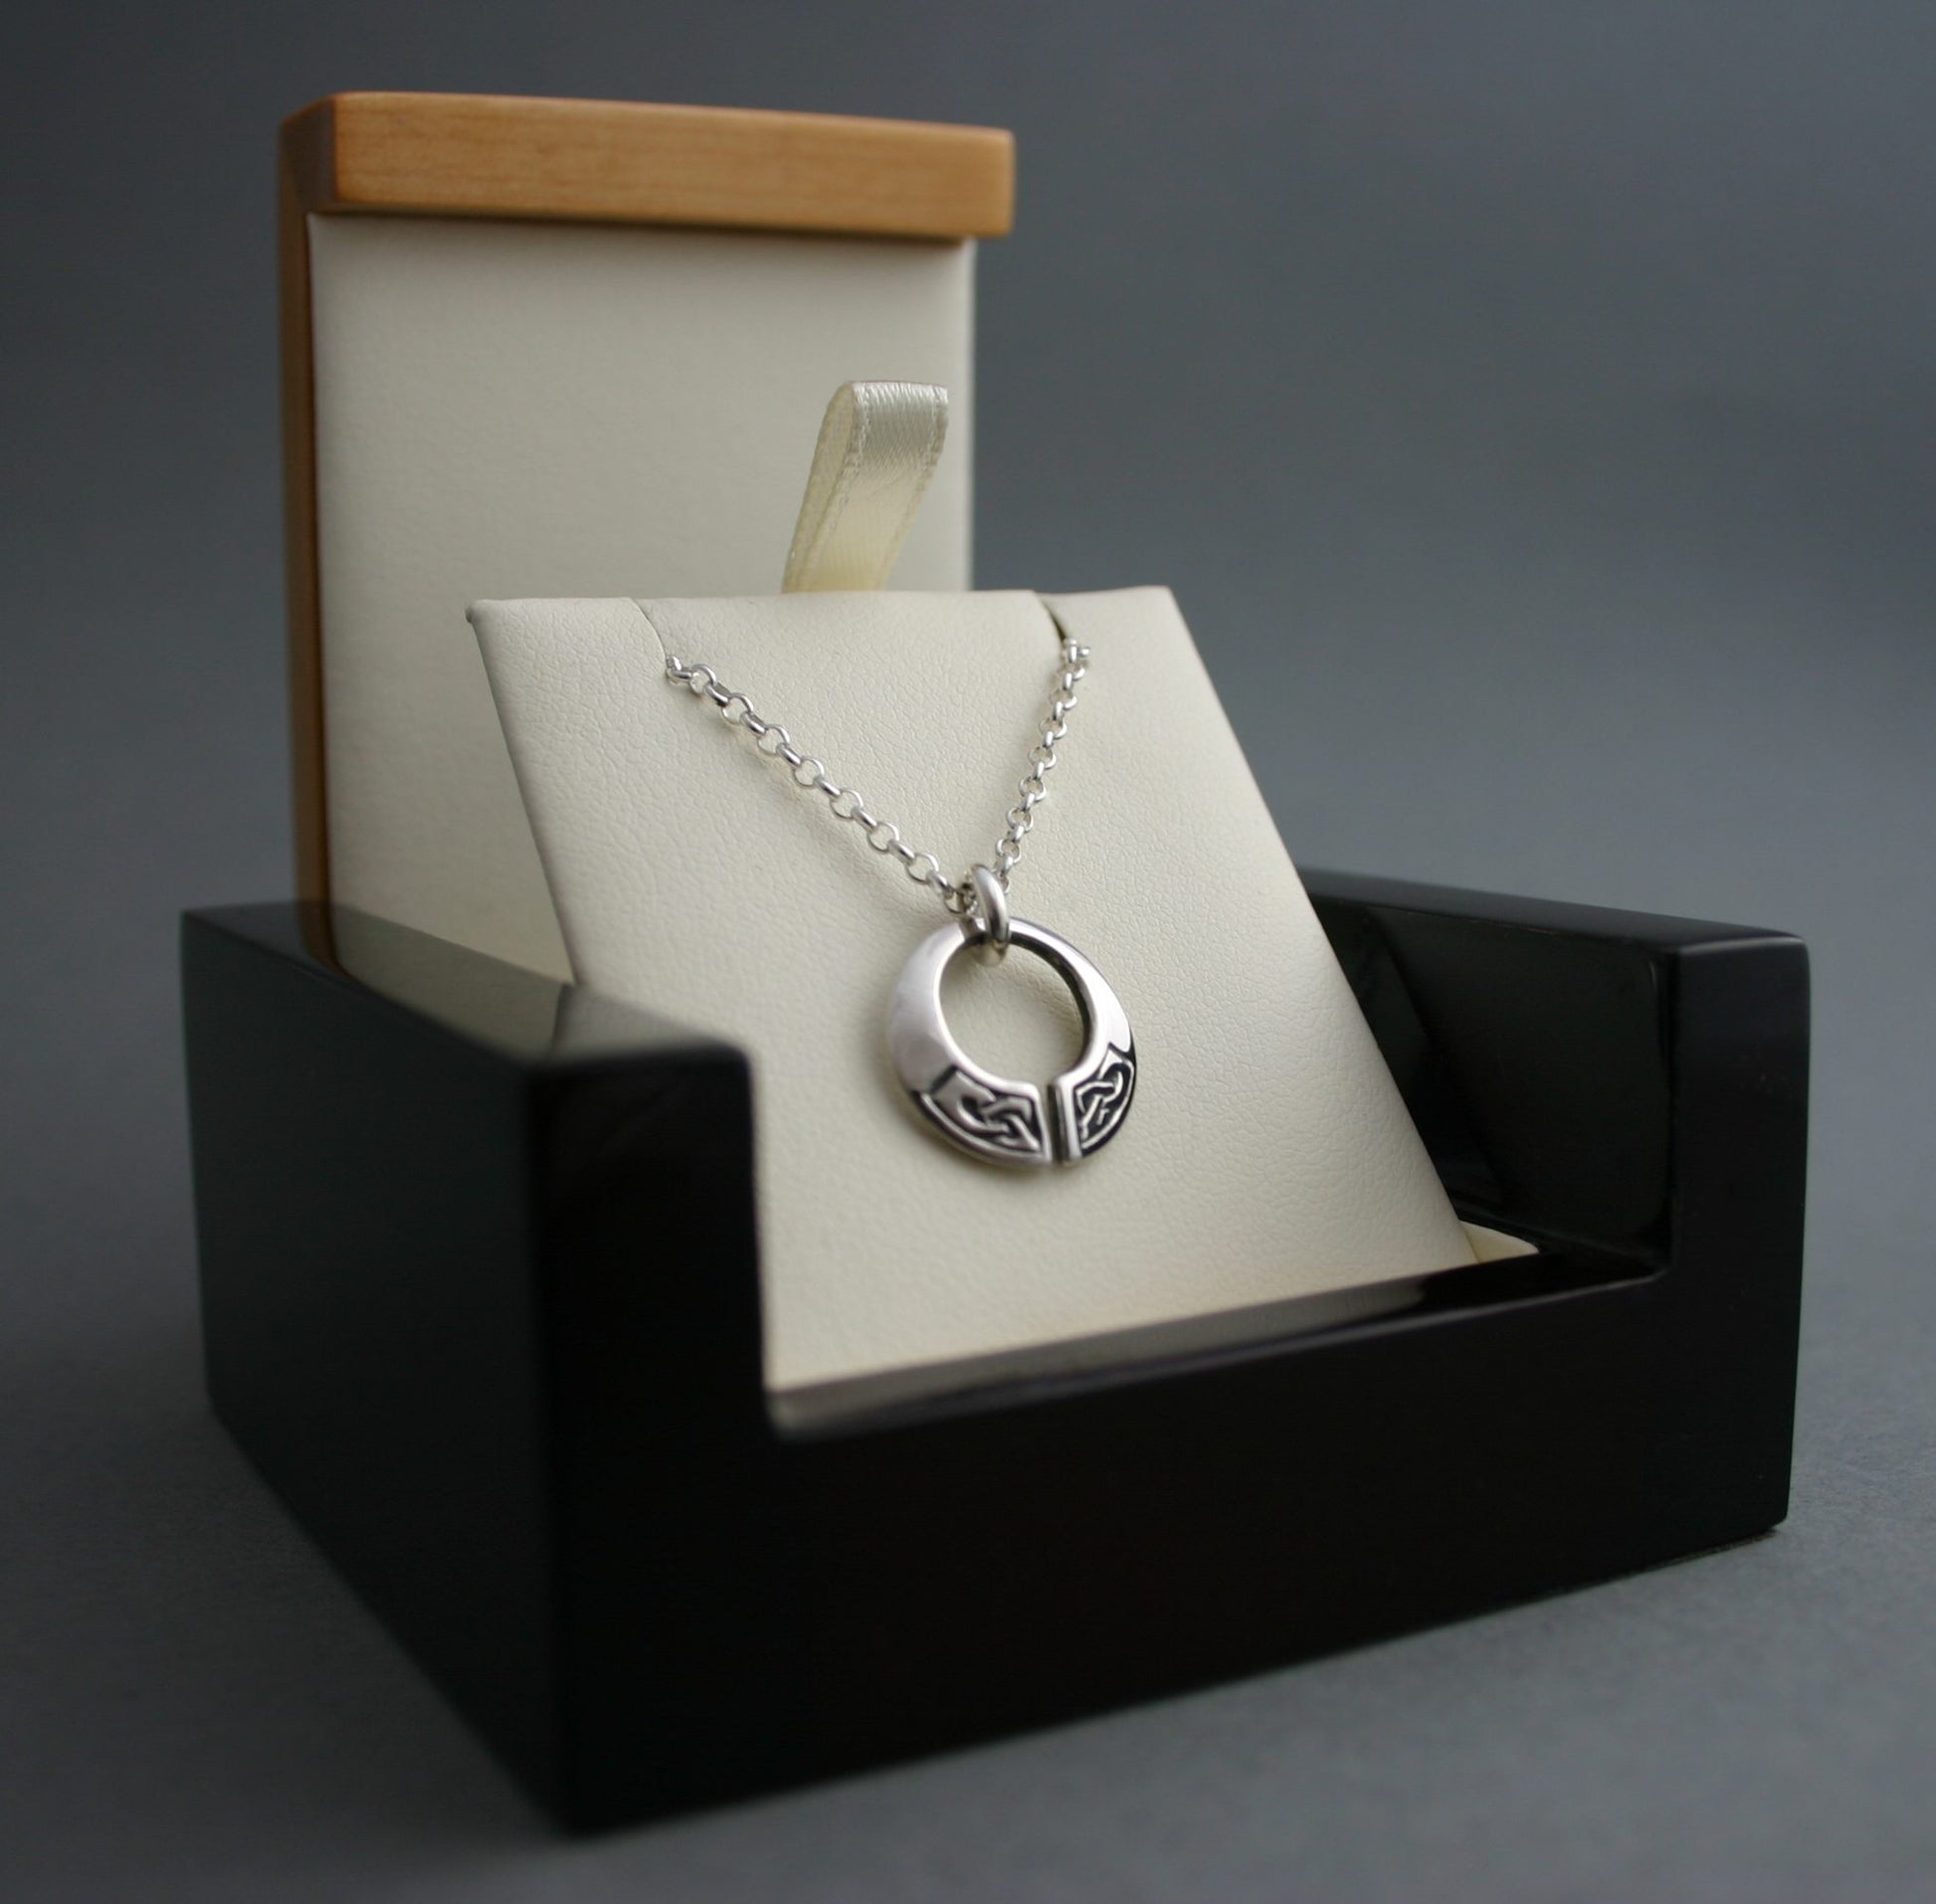 Celtic torc pendant necklace in box